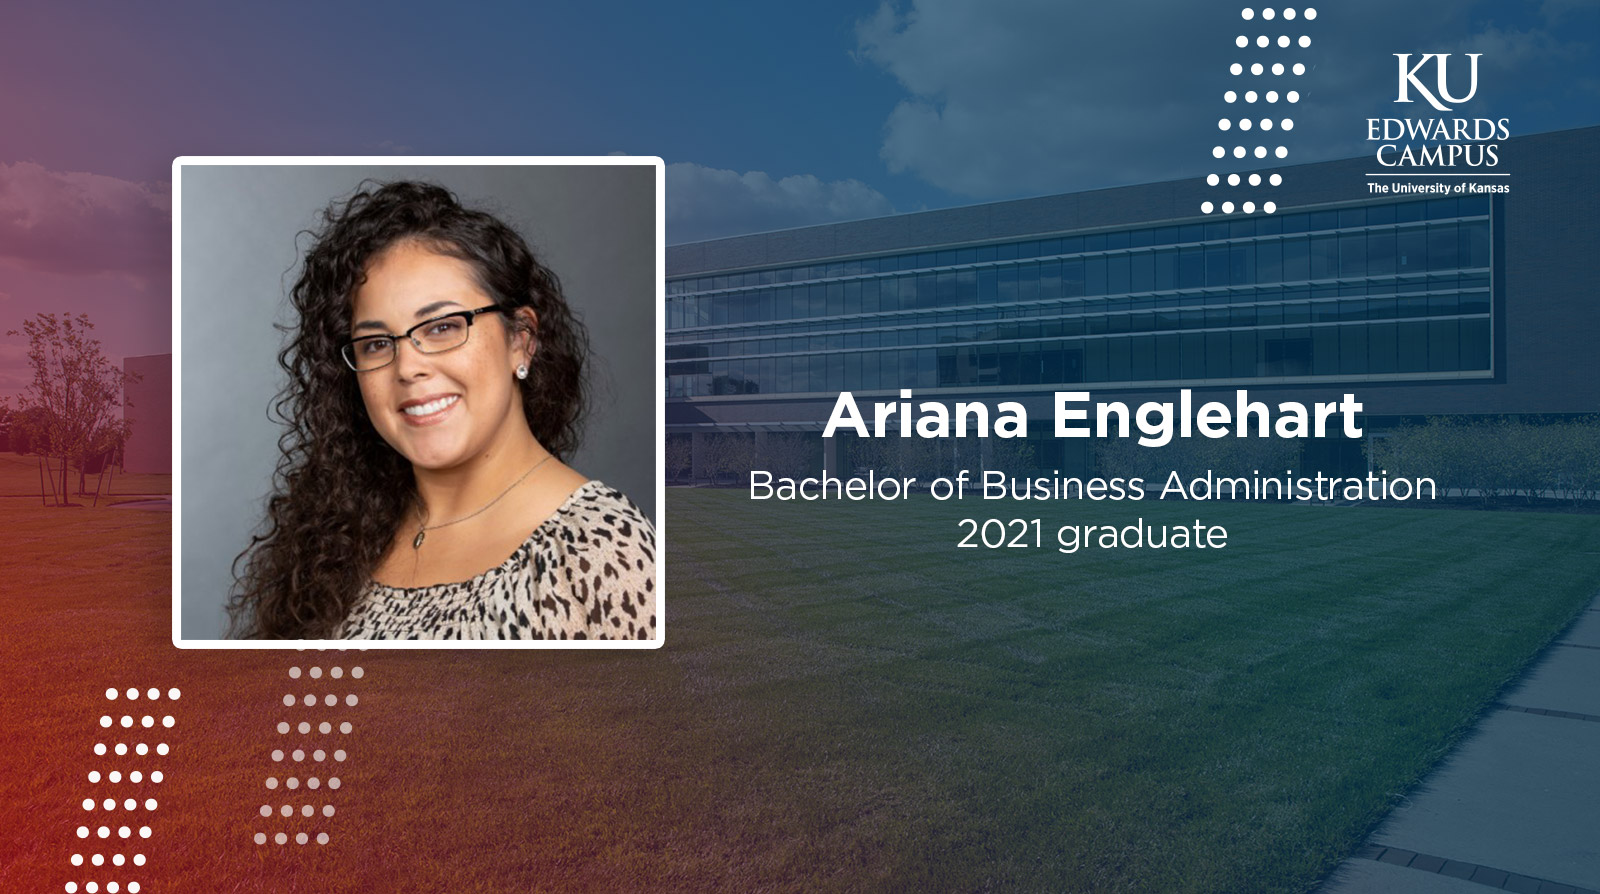 Ariana Englehart, Bachelor of Business Administration, 2021 graduate